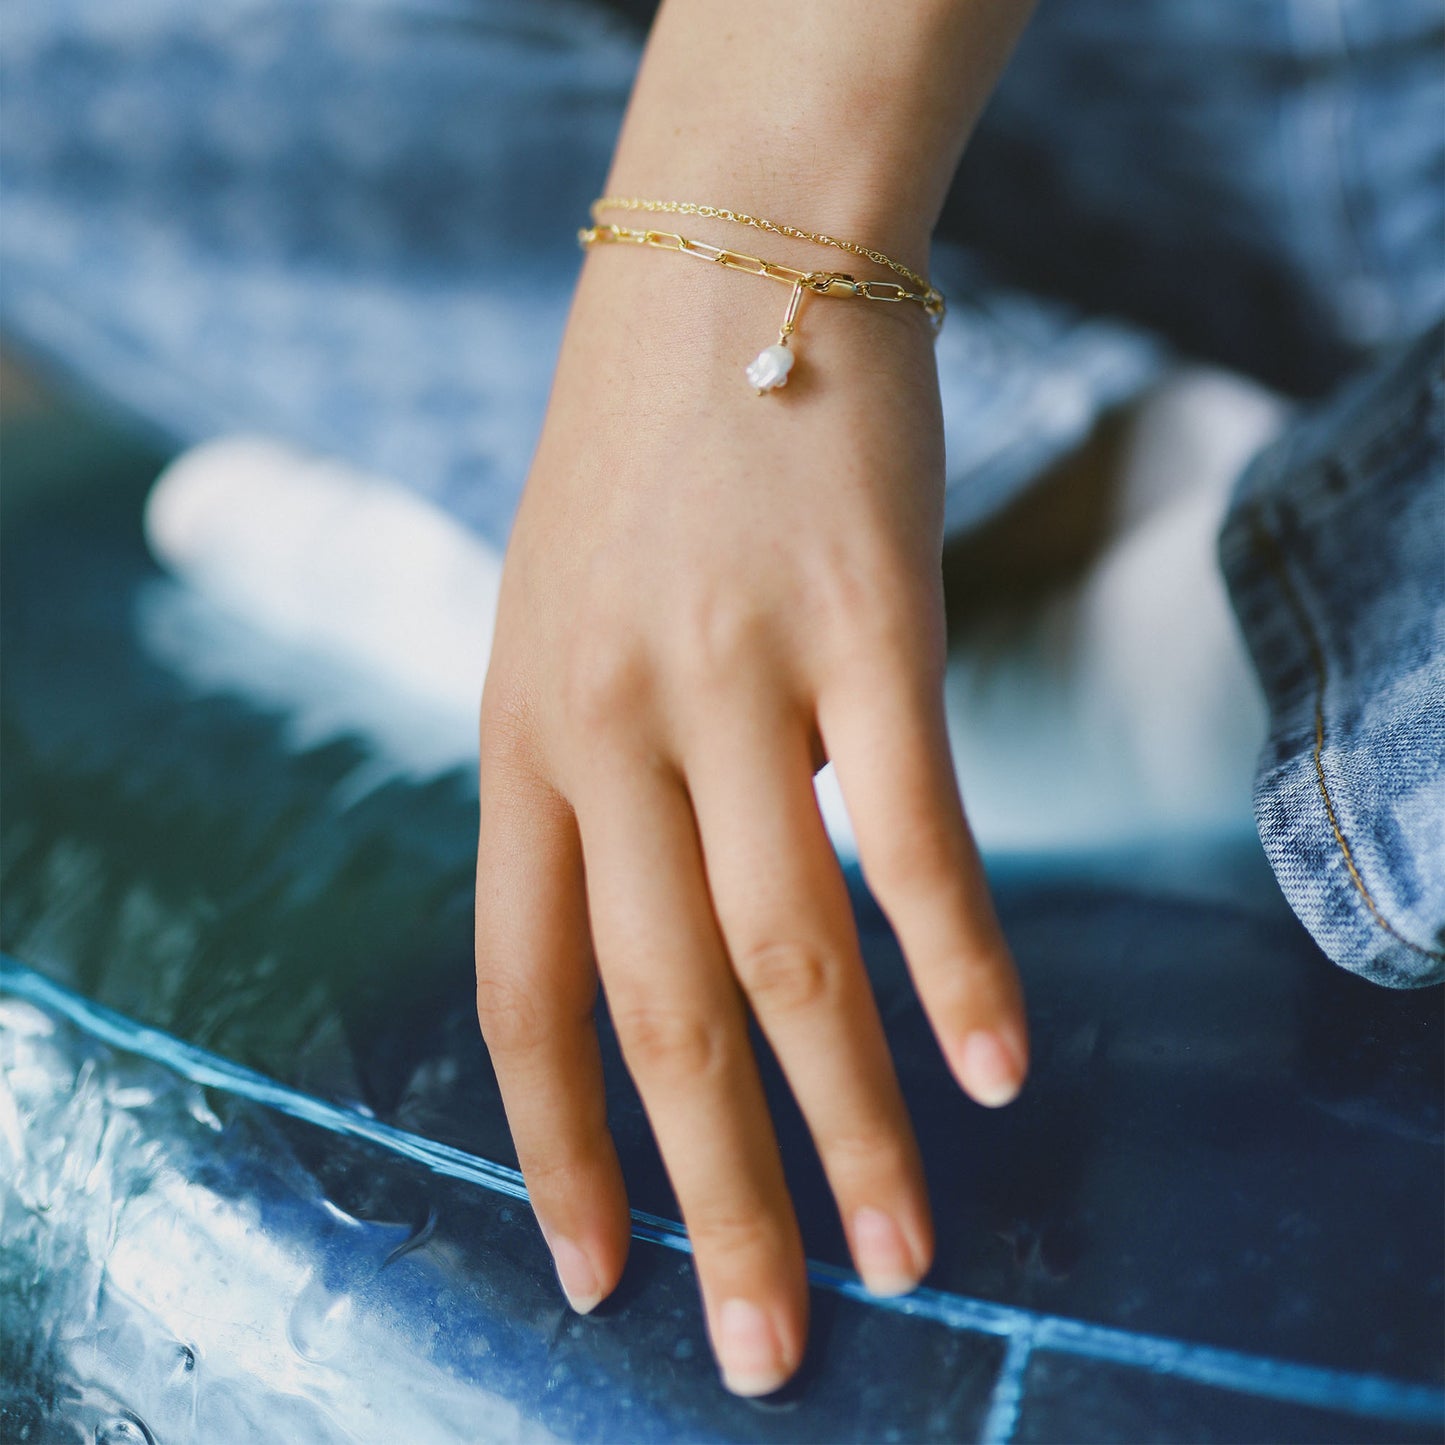 Twist chain bracelet gold filled